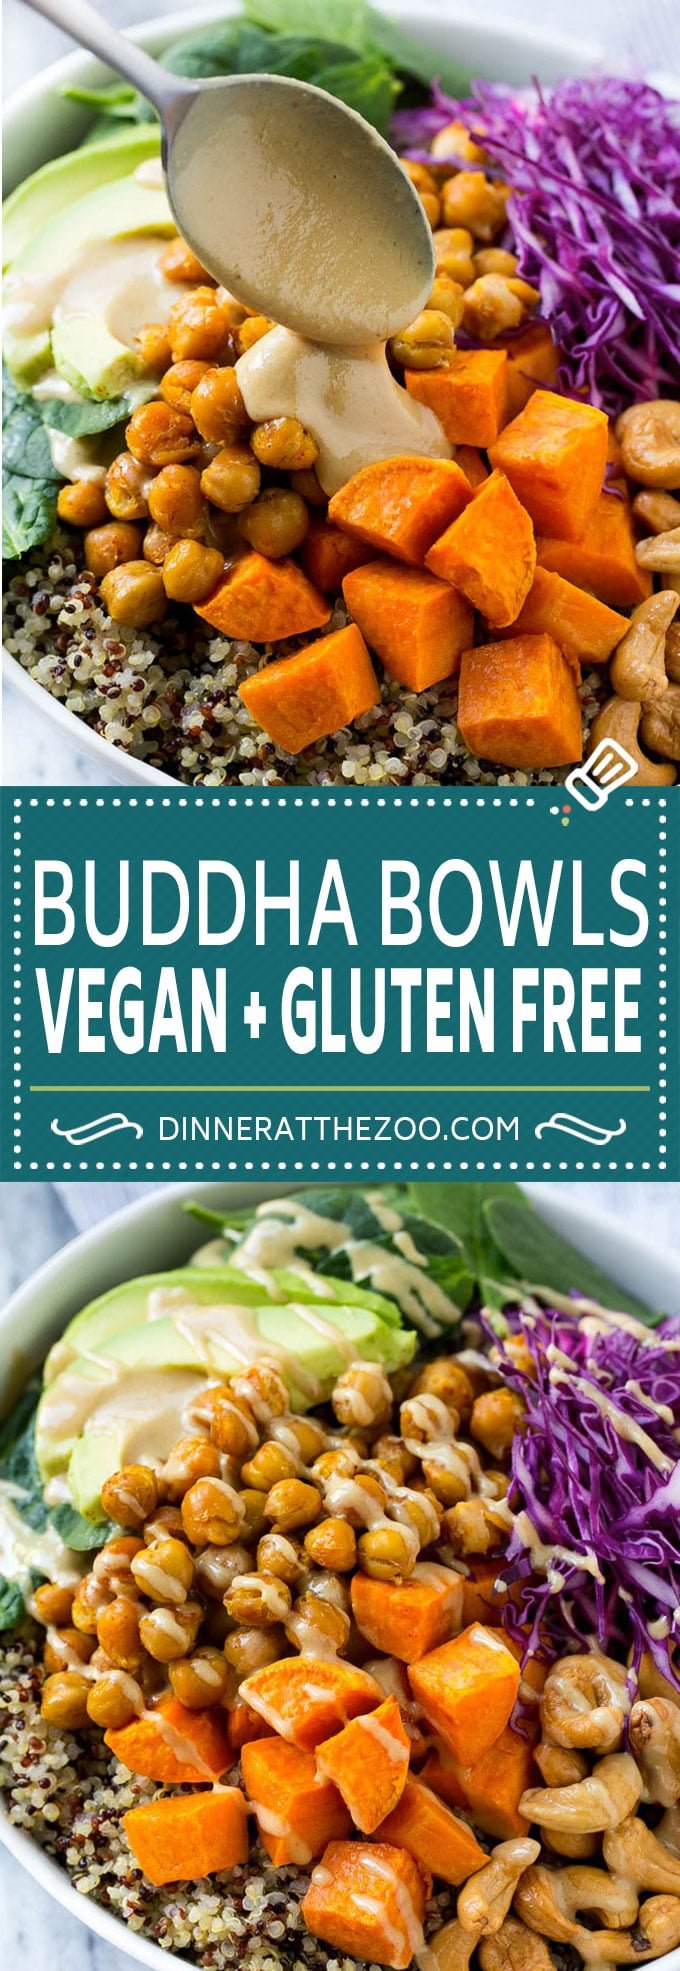 Buddha Bowl Recipe | Vegan Buddha Bowl | Quinoa Bowl | Sweet Potato Recipe | Quinoa Recipe #vegan #sweetpotato #quinoa #healthy #cleaneating #dinner #dinneratthezoo